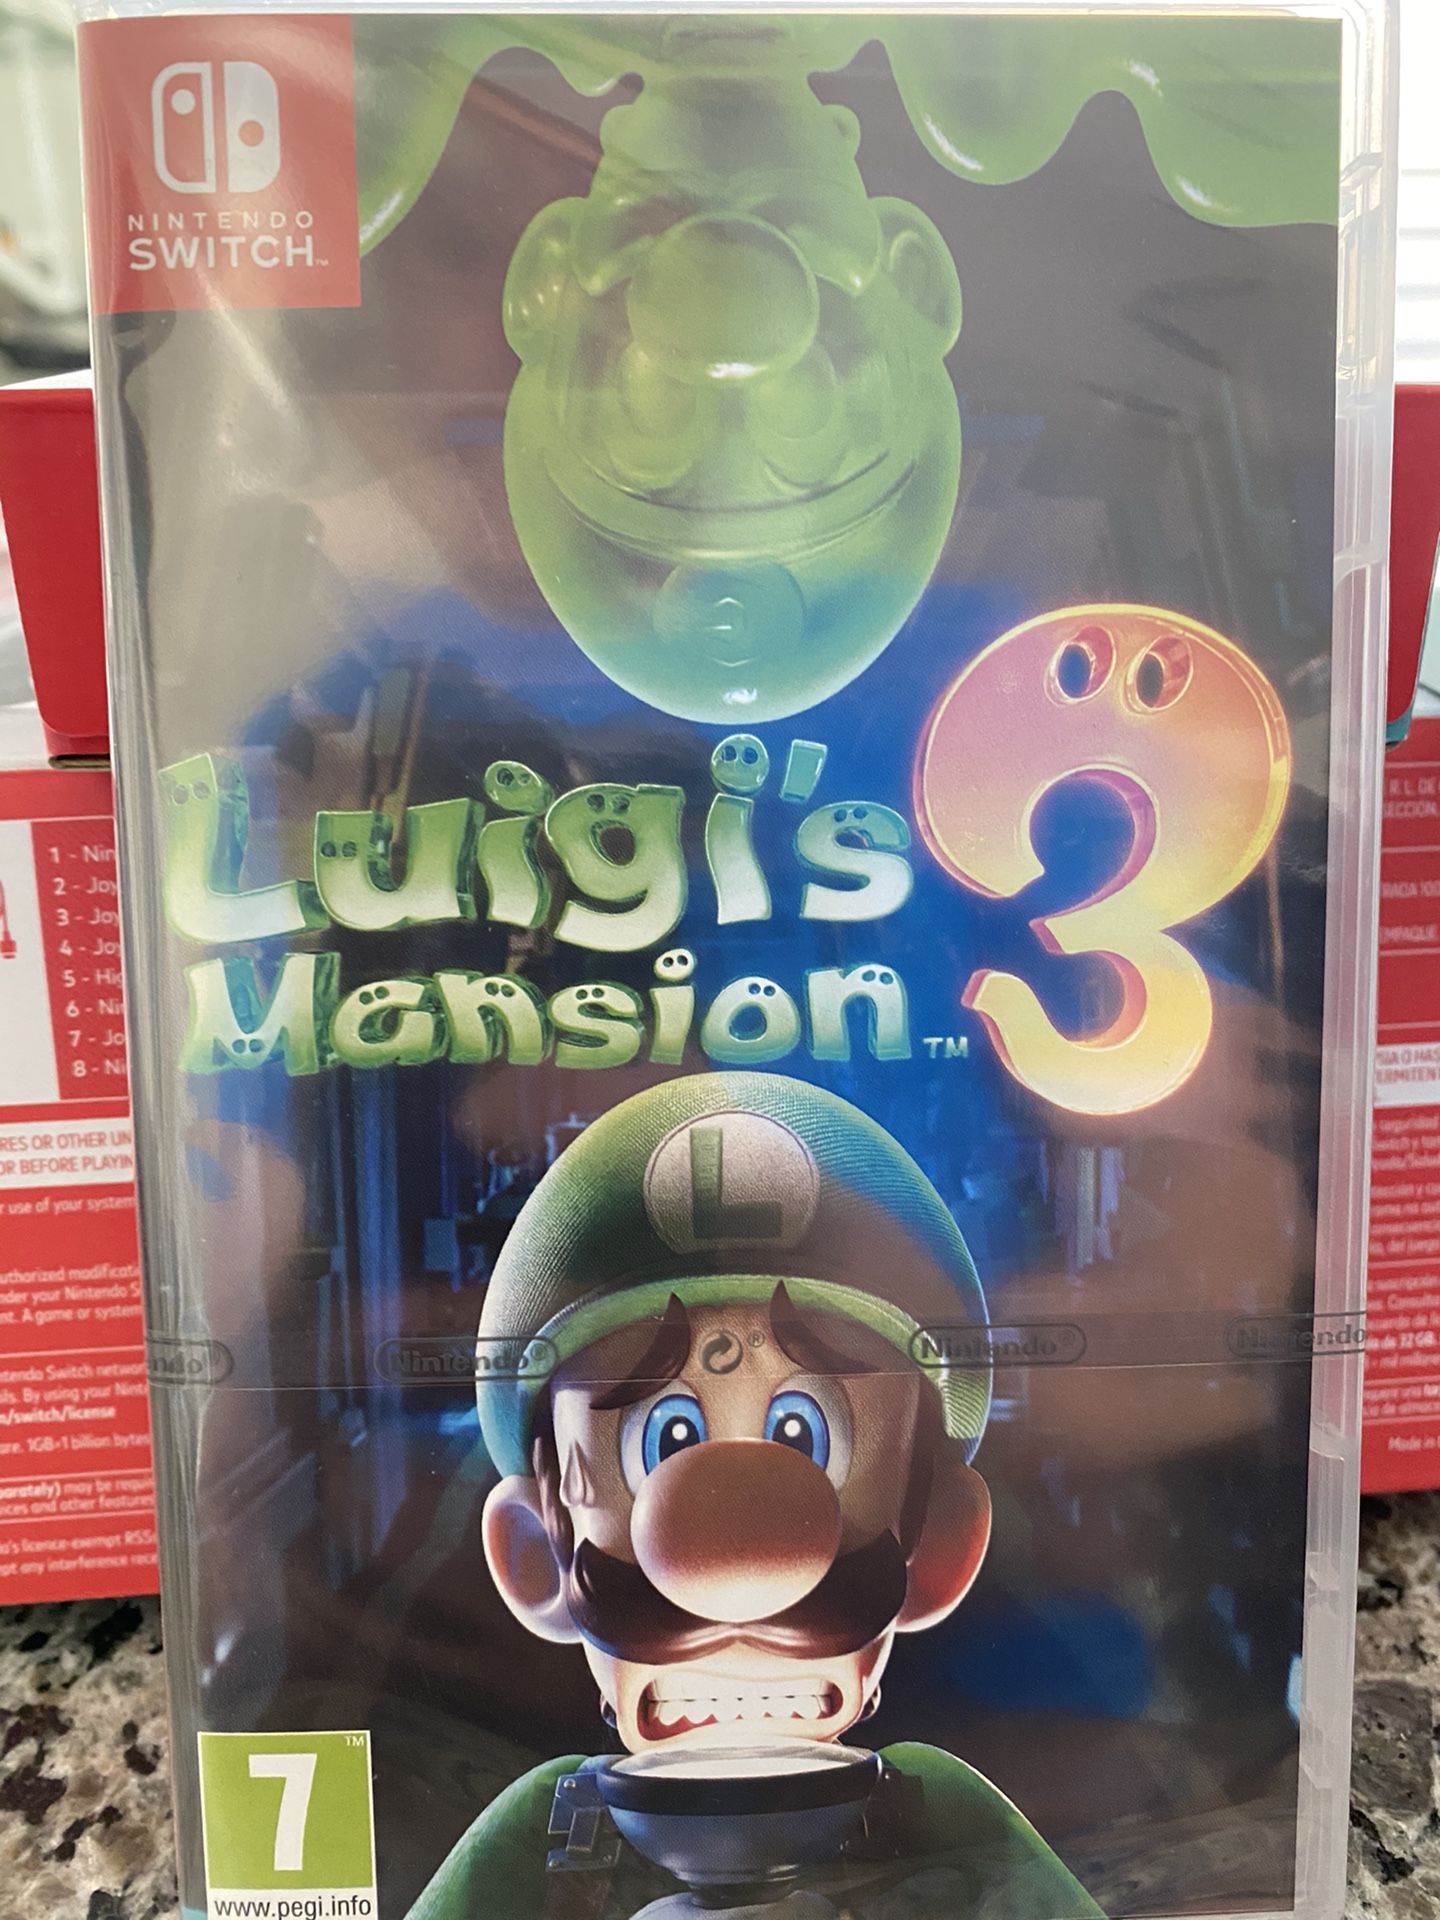 Luigi’s mansion 3 - Nintendo Switch - brand new